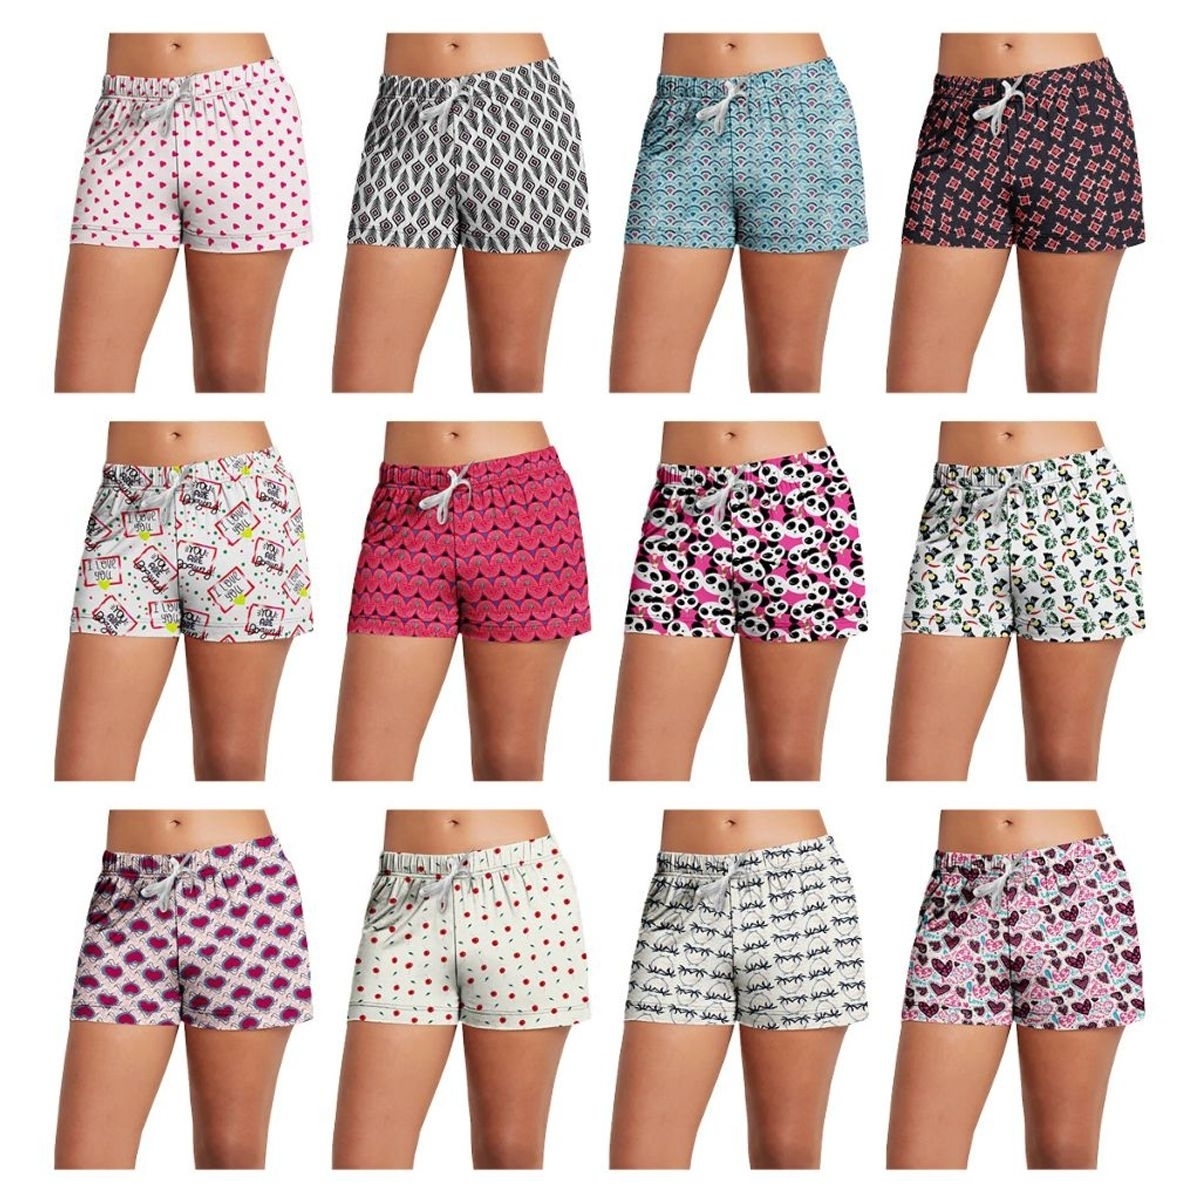 2-Pack: Women's Super-Soft Lightweight Fun Printed Comfy Lounge Bottom Pajama Shorts W/ Drawstring - Medium, Animal